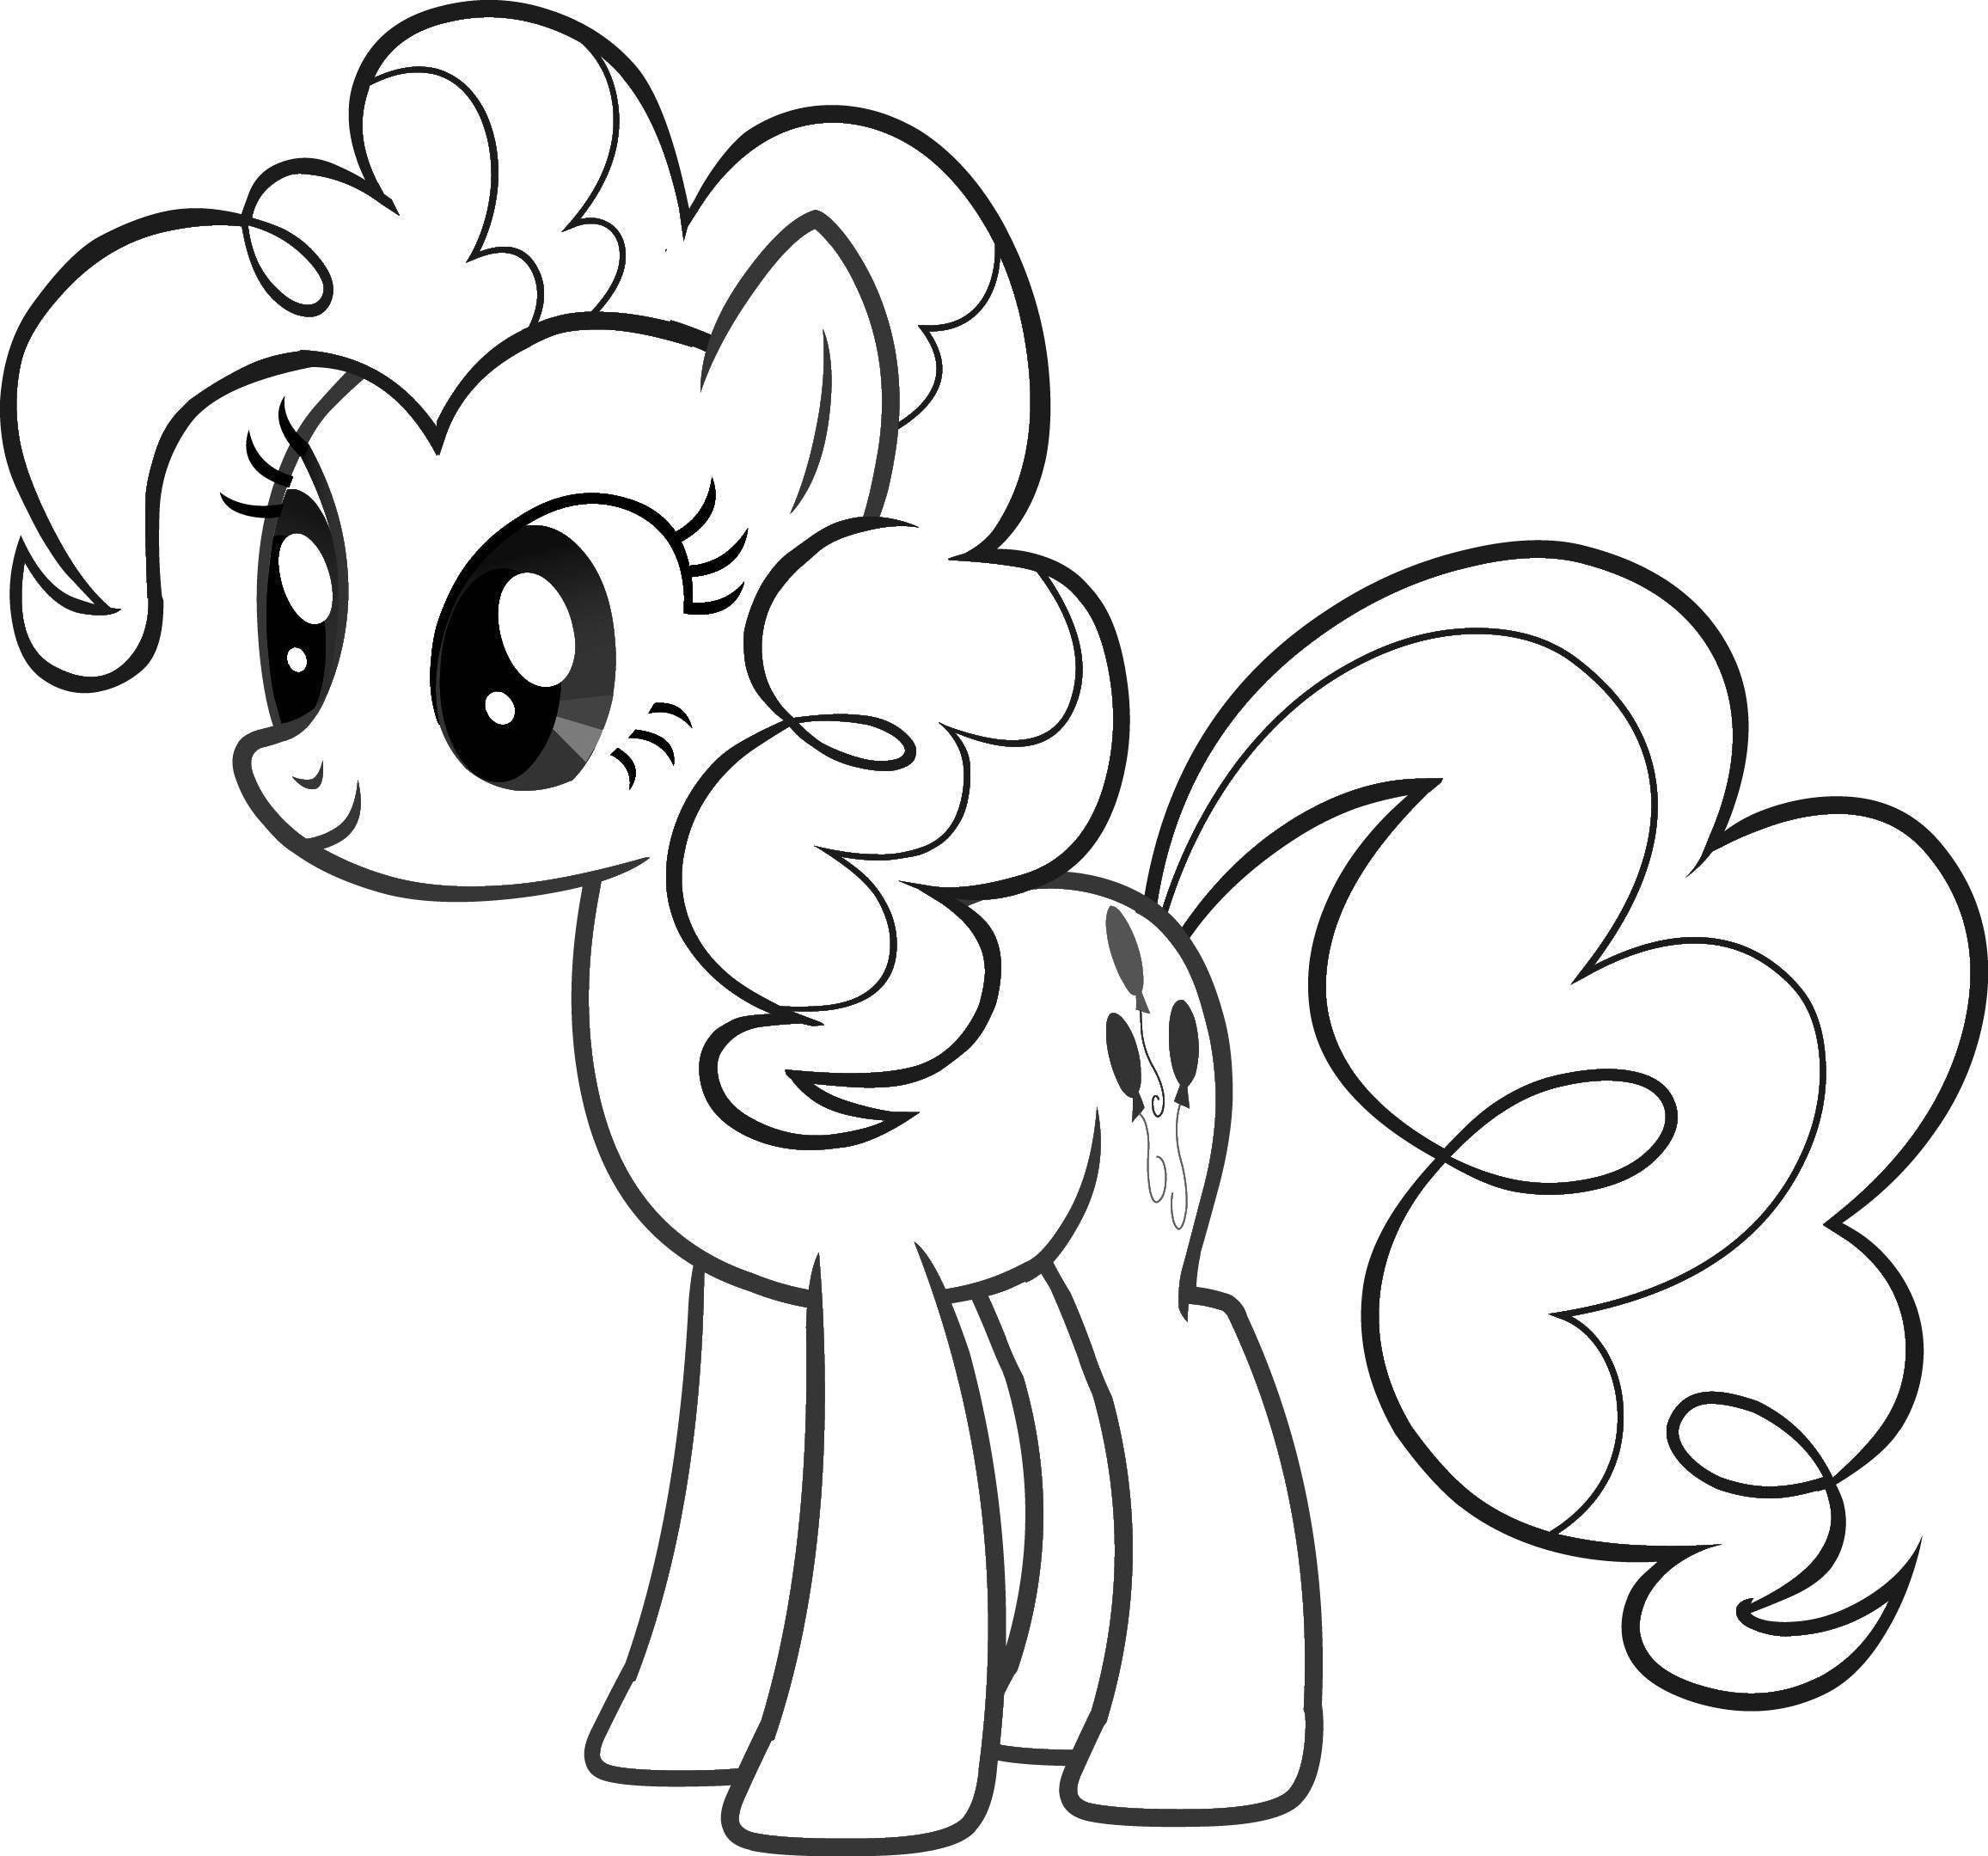 Название: Раскраска Пони из my little pony . Категория: раскраски. Теги: Пони, My little pony .